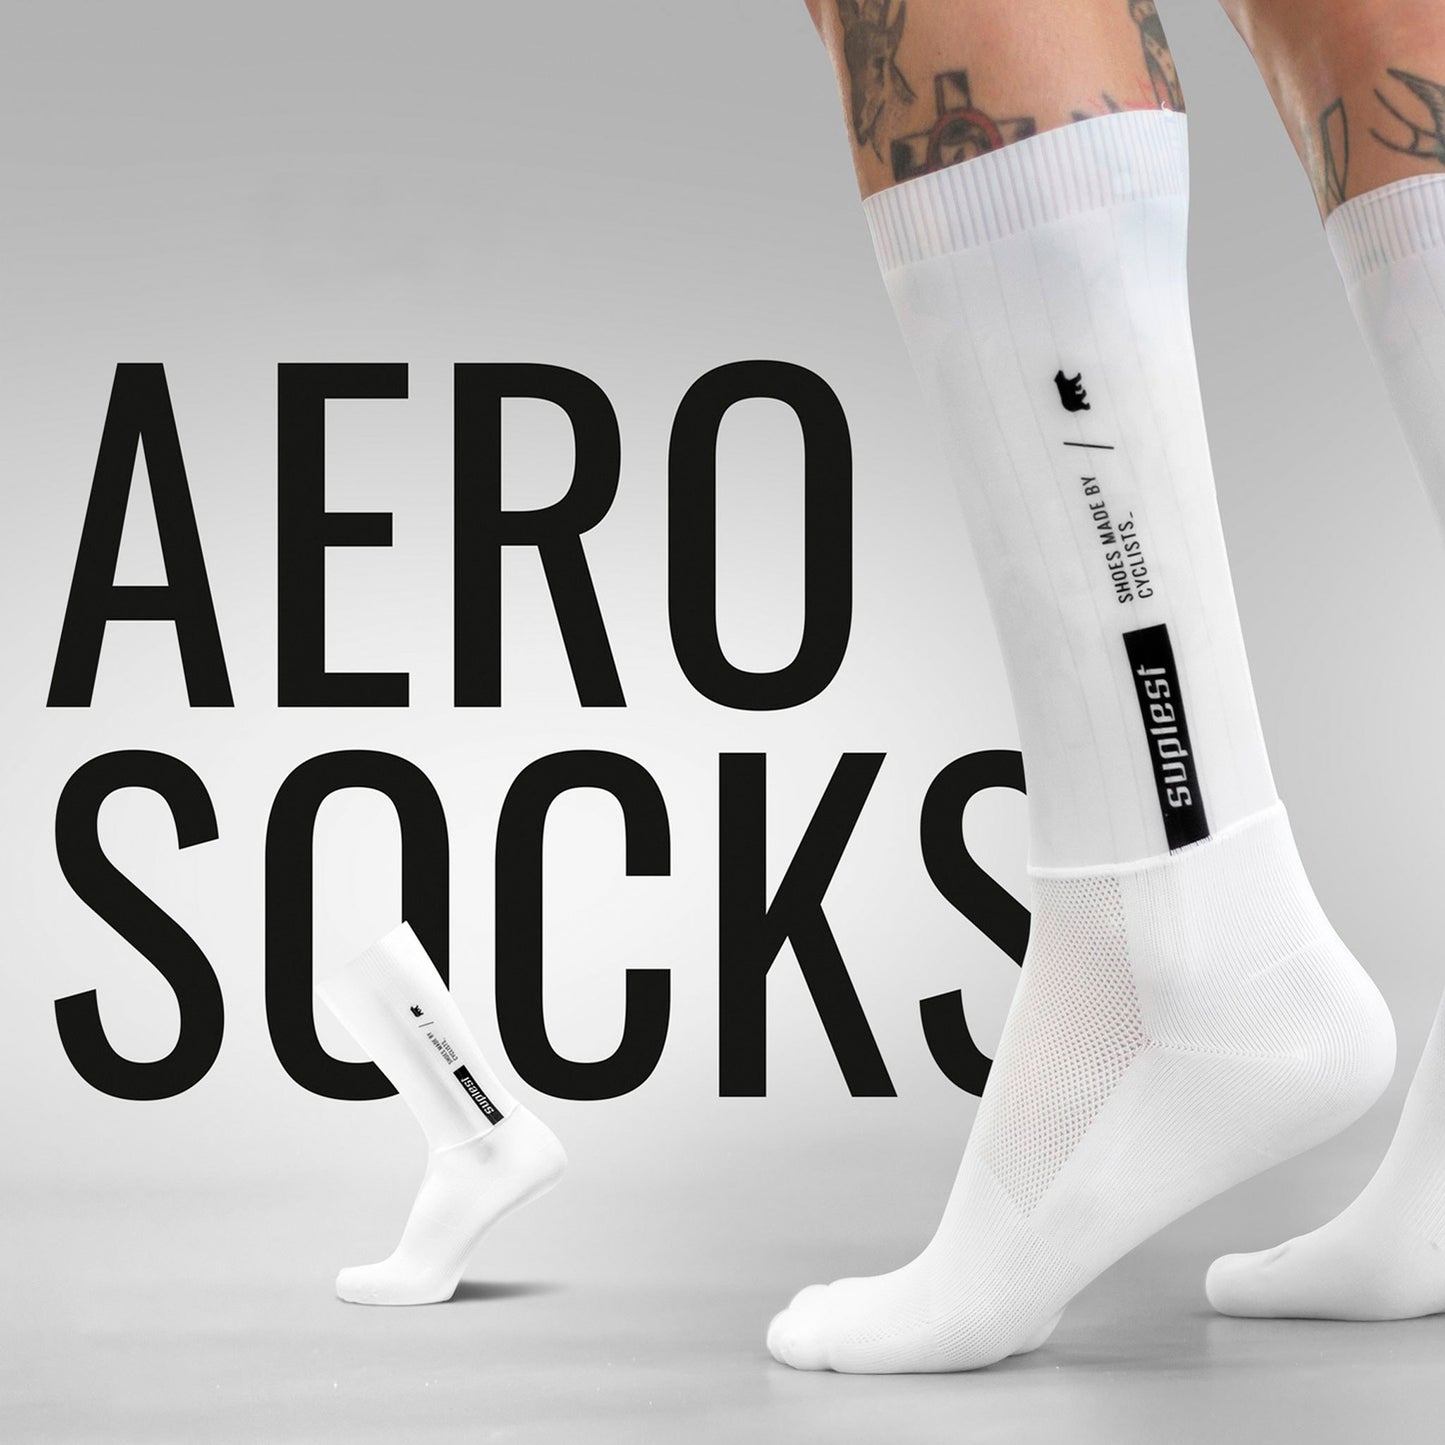 Aerosocks from Suplest from Ascender Cycling Club Switzerland Presentation Aero